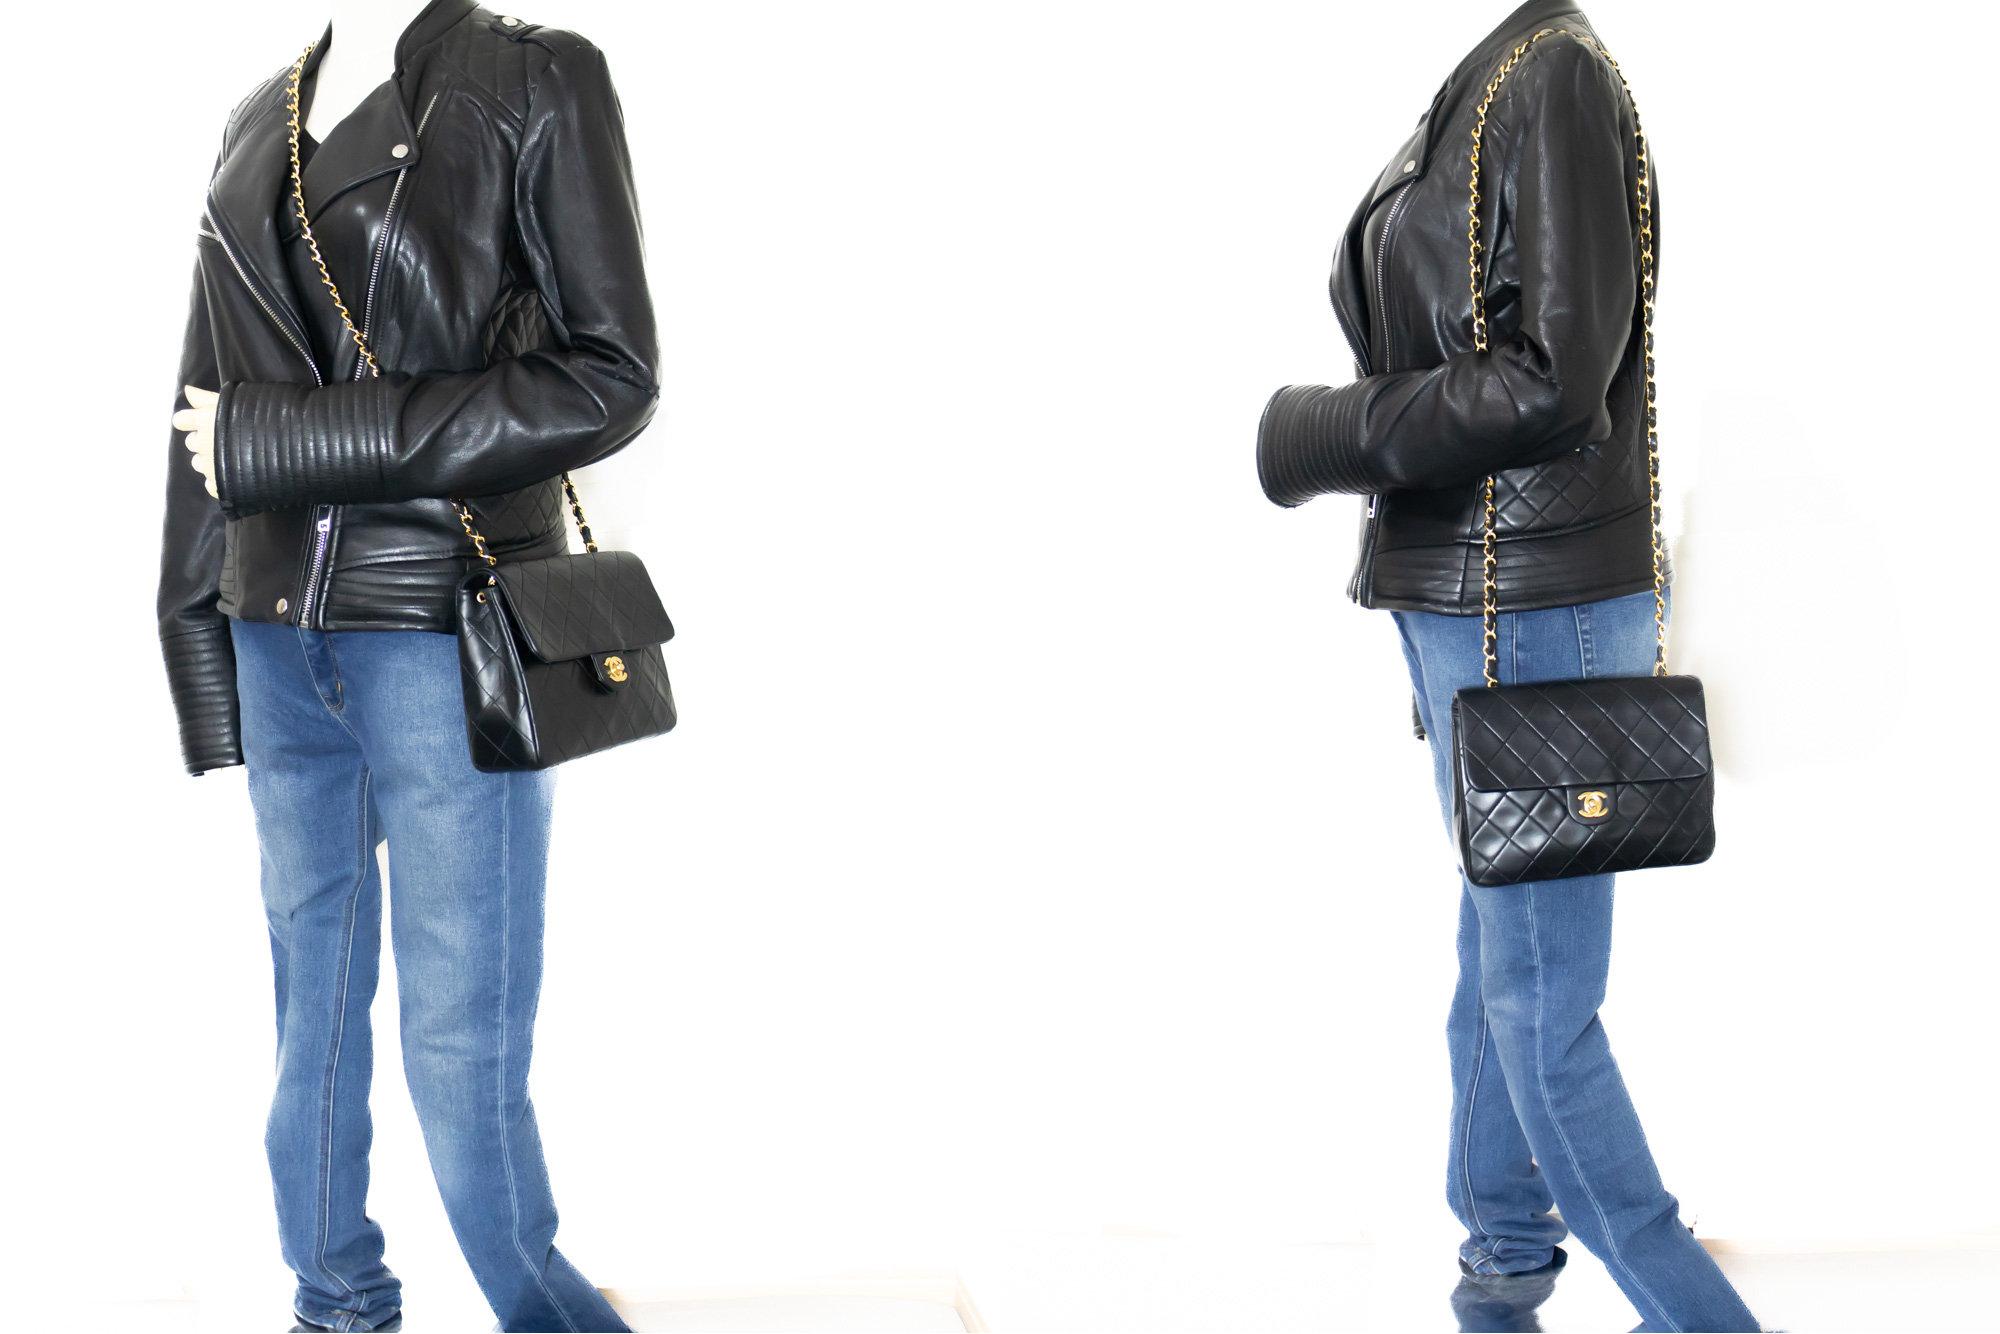 CHANEL Mini Square Small Chain Shoulder Crossbody Bag Black Quilt For Sale 6